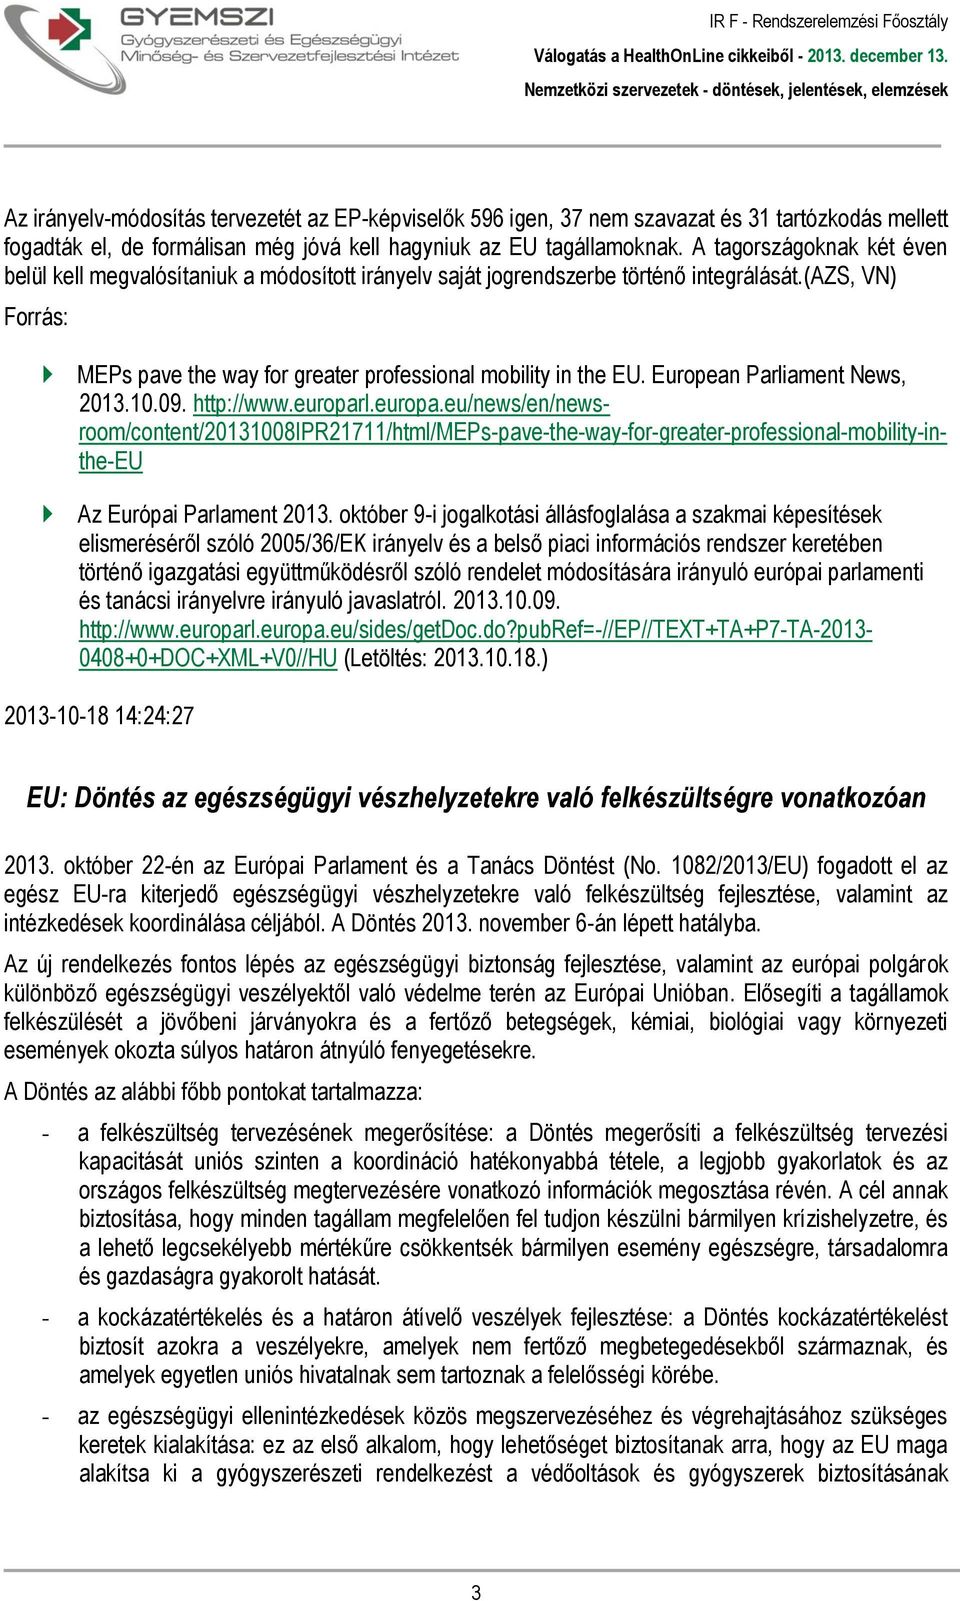 European Parliament News, 2013.10.09. http://www.europarl.europa.eu/news/en/newsroom/content/20131008ipr21711/html/meps-pave-the-way-for-greater-professional-mobility-inthe-eu Az Európai Parlament 2013.